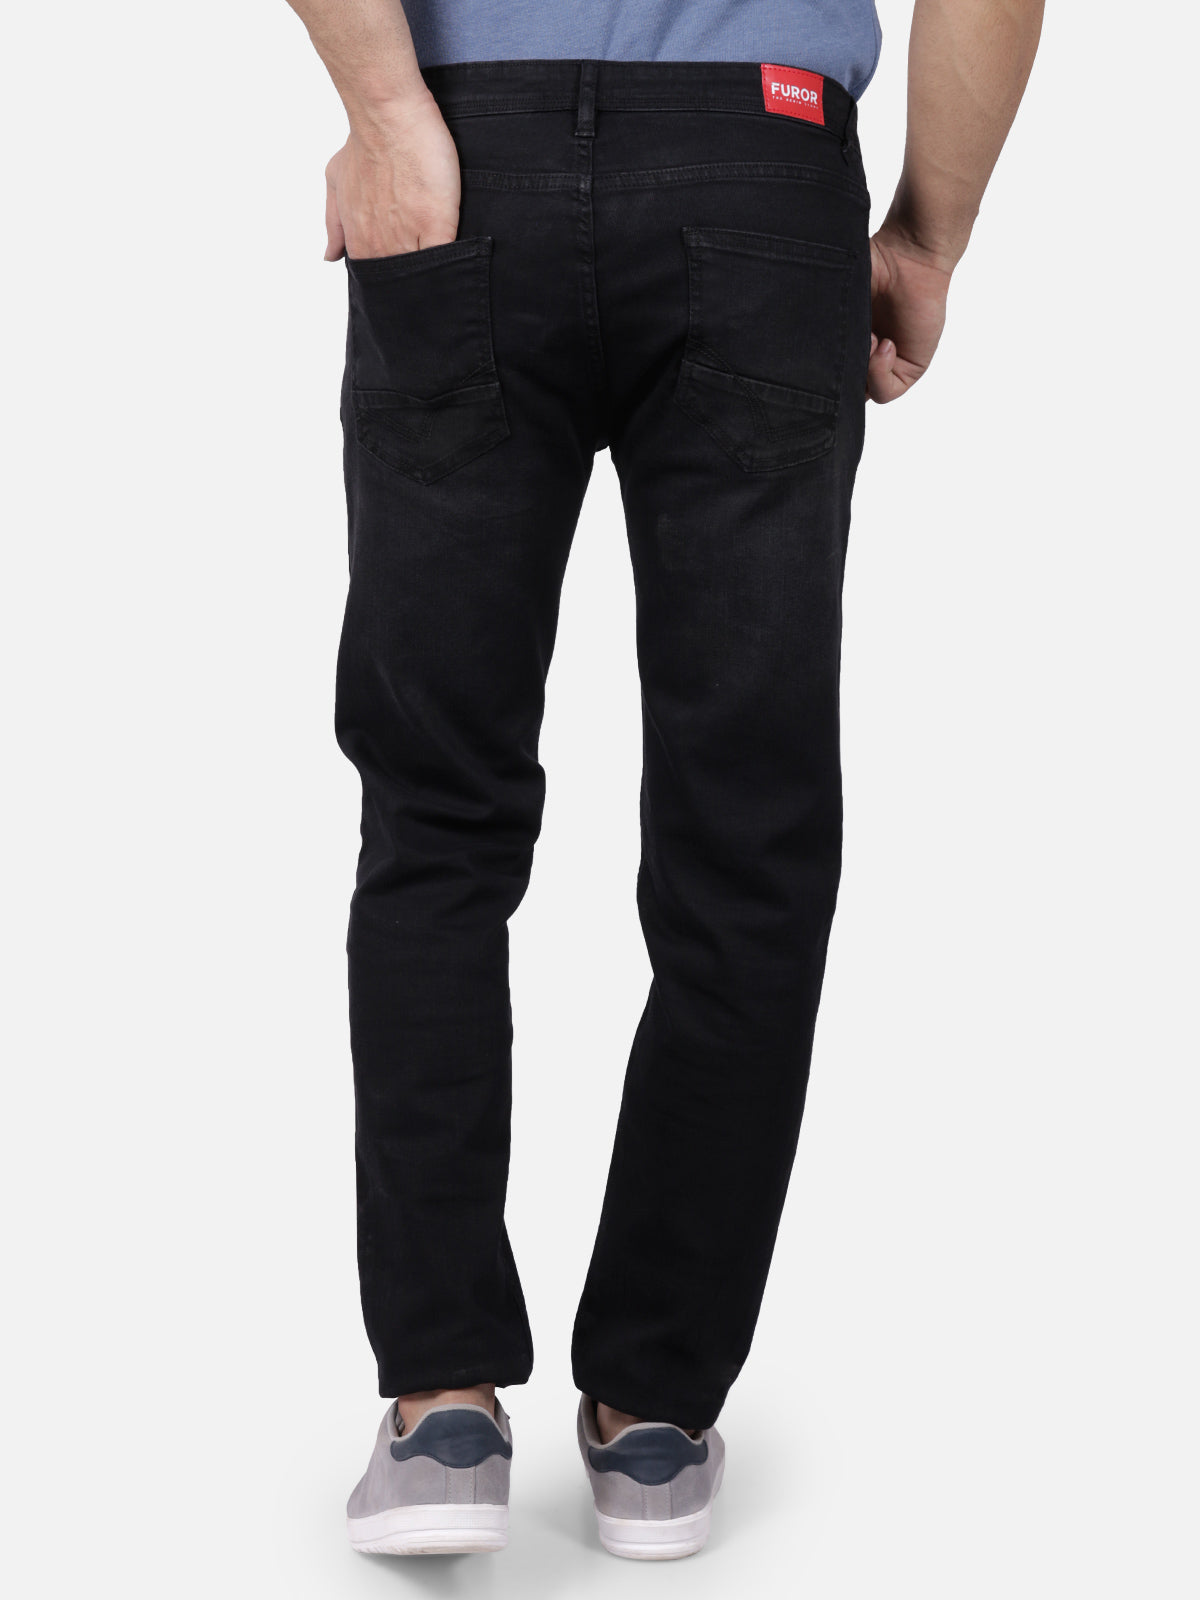 Men's Black Denim Jeans - FMBP18-055